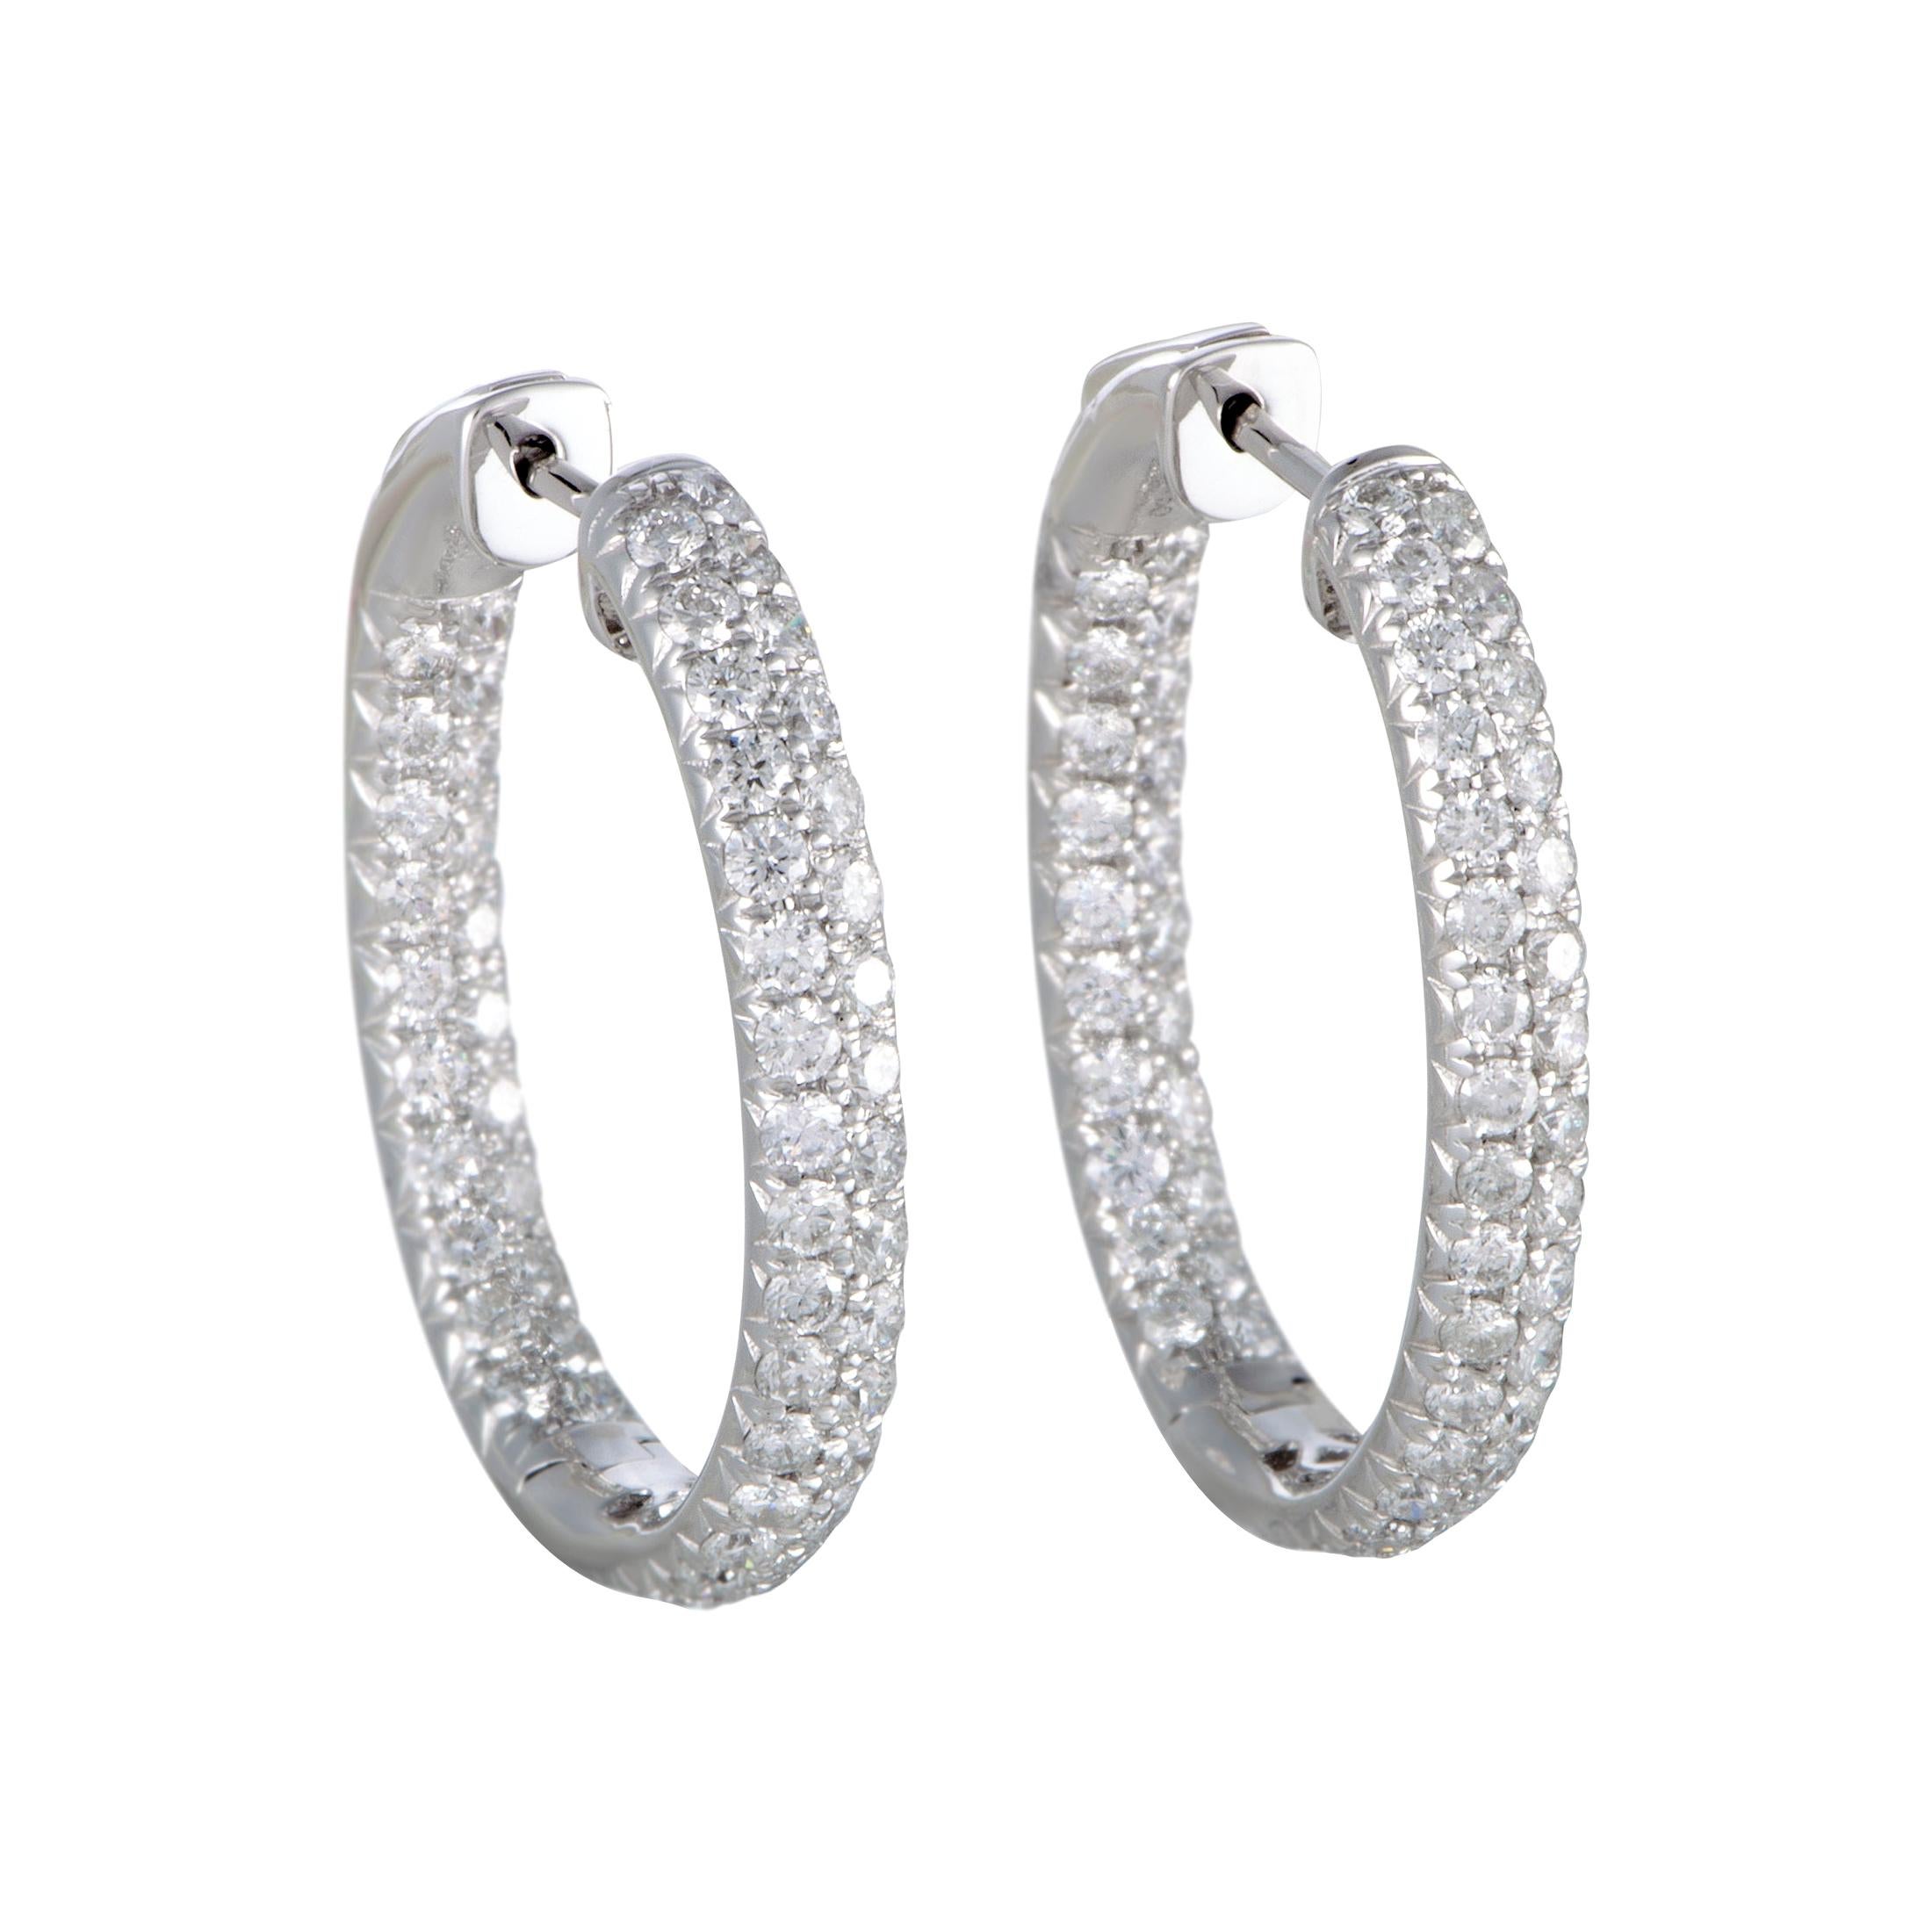 LB Exclusive 18 Karat White Gold Inside Out, 3 Carat Diamond Pave Hoop Earrings